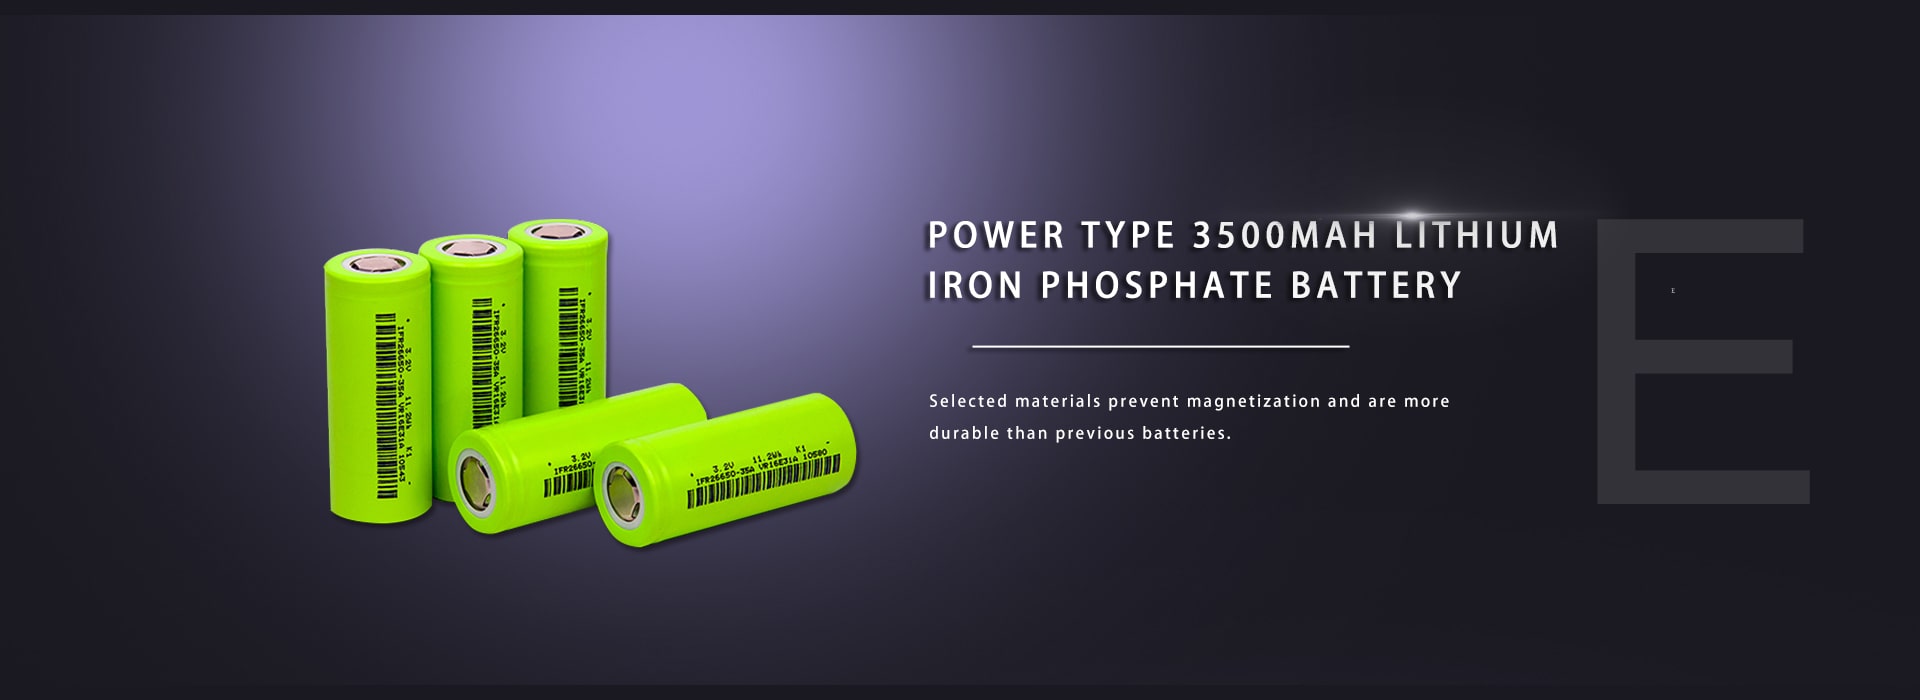 3500mAH Lithium iron phosphate battery